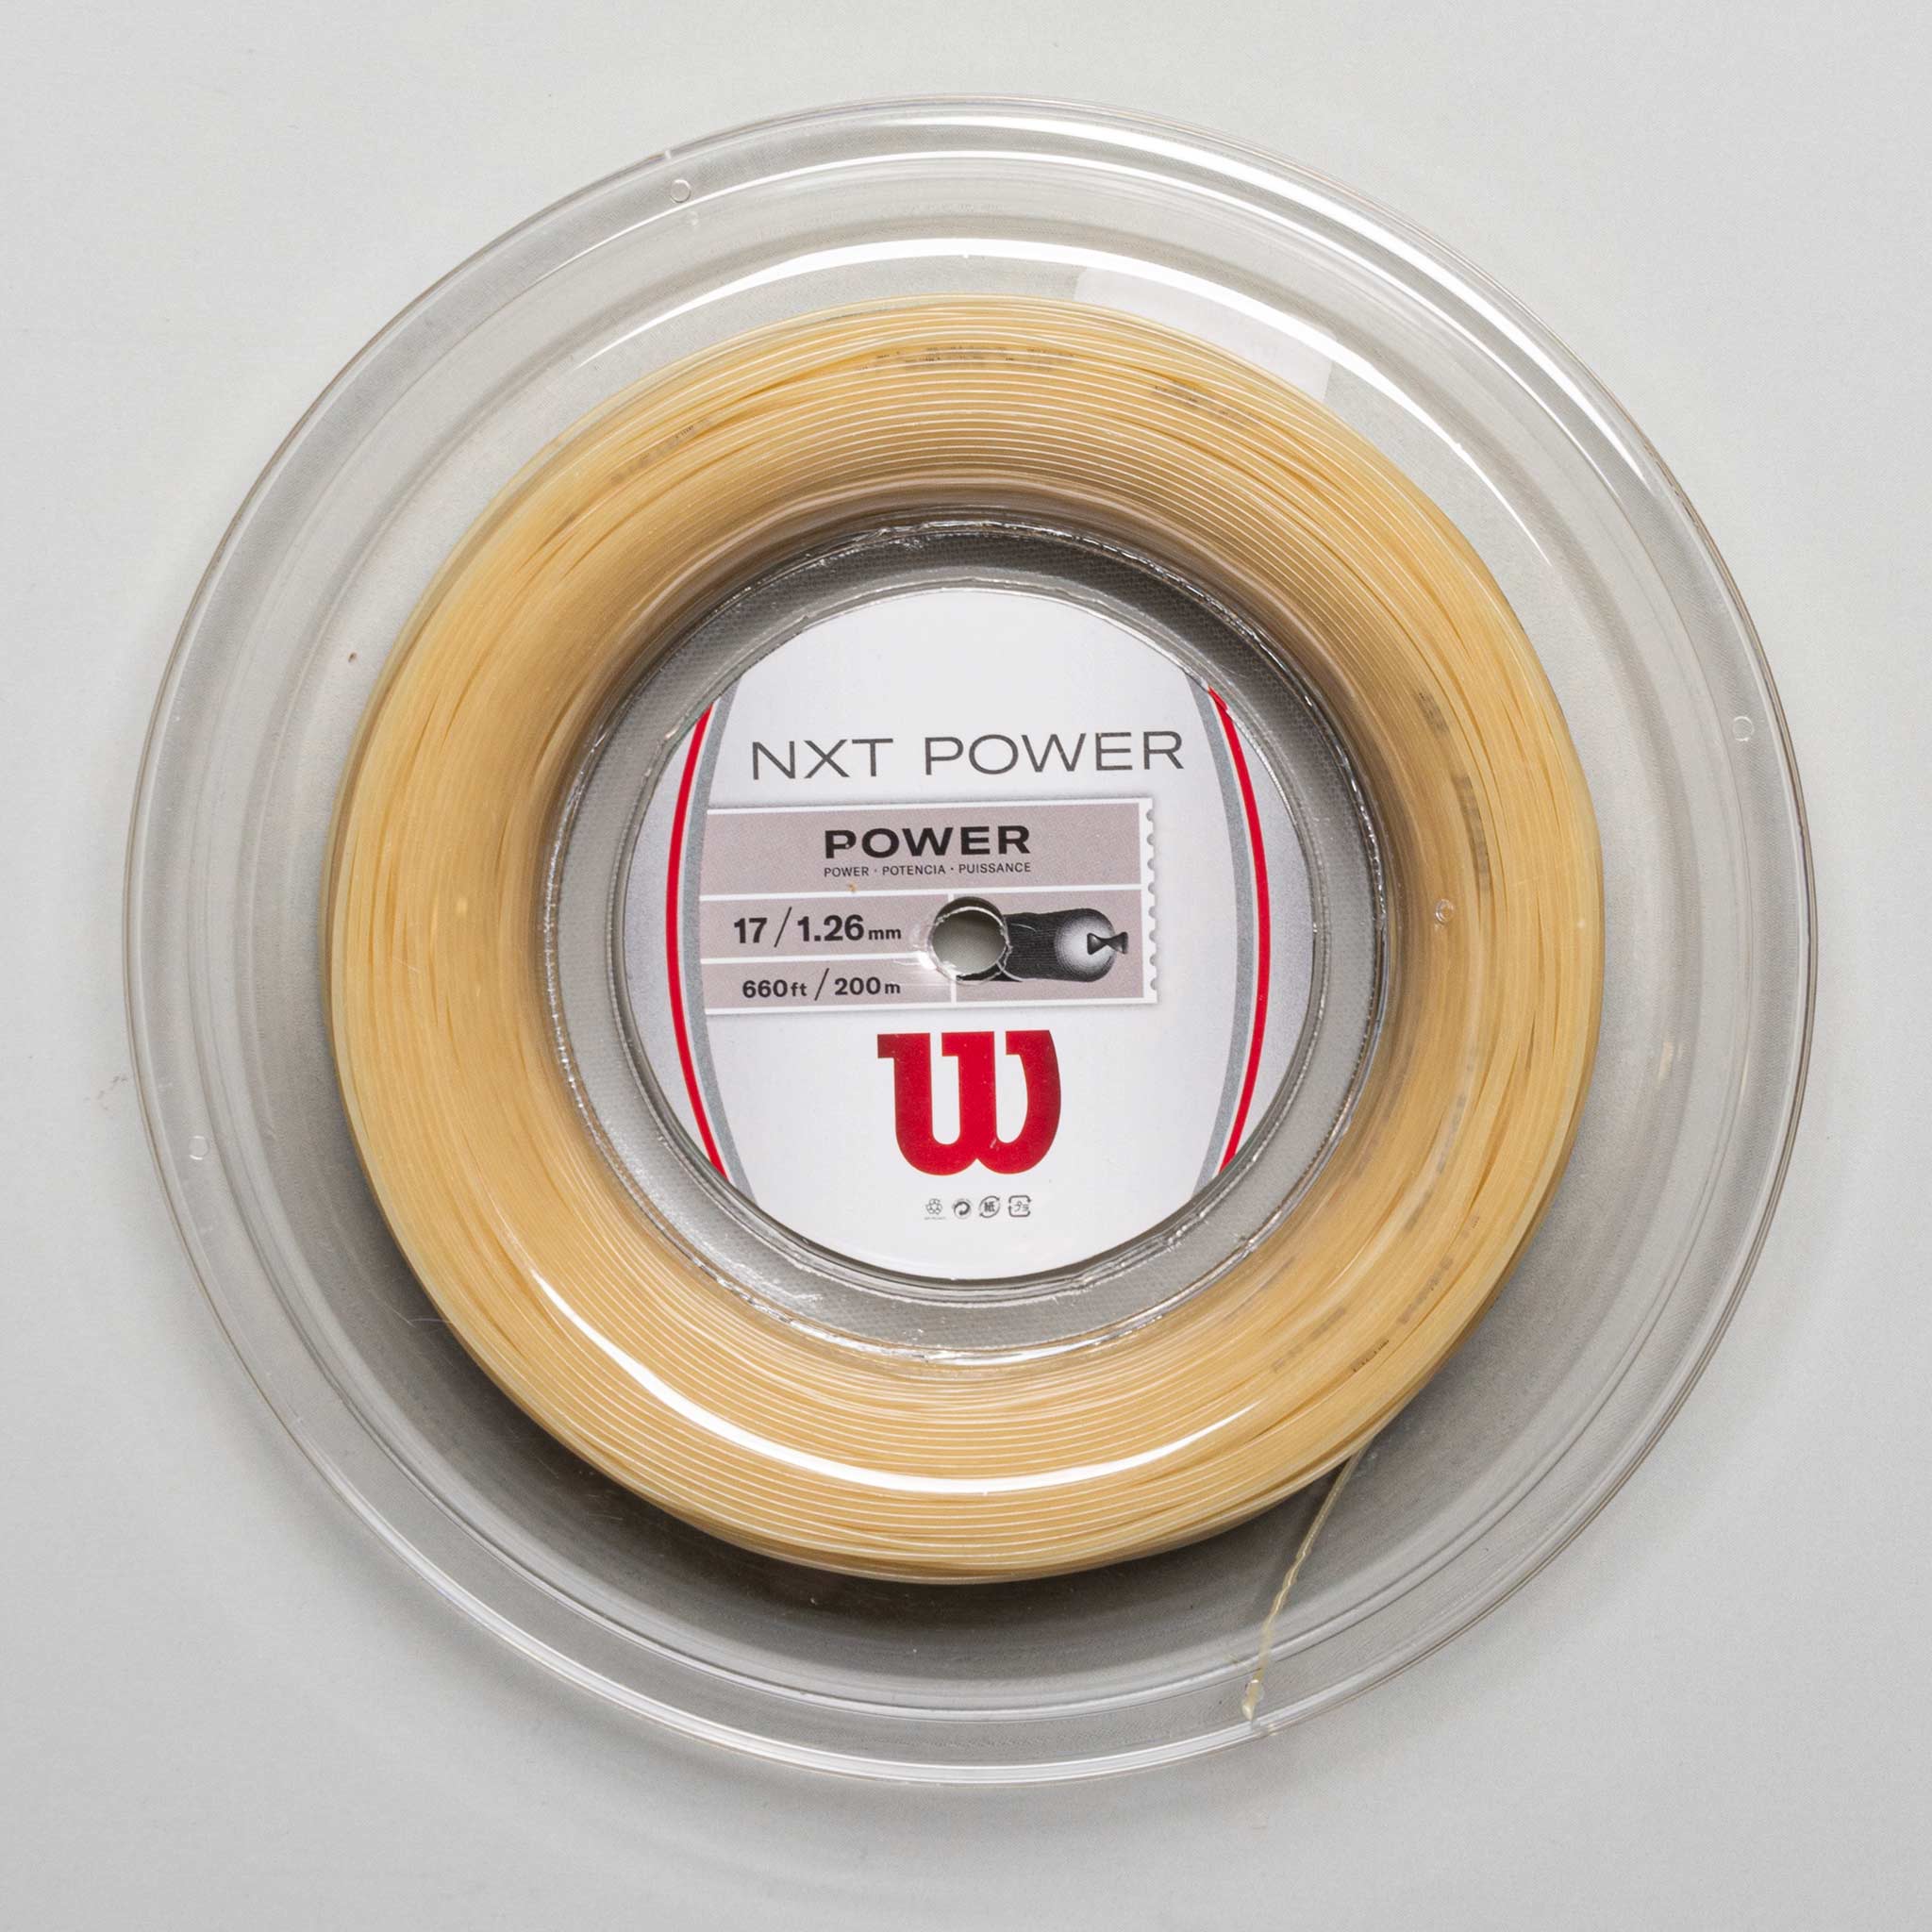 Wilson NXT Power Reel 660ft/200m 17G/1.26mm